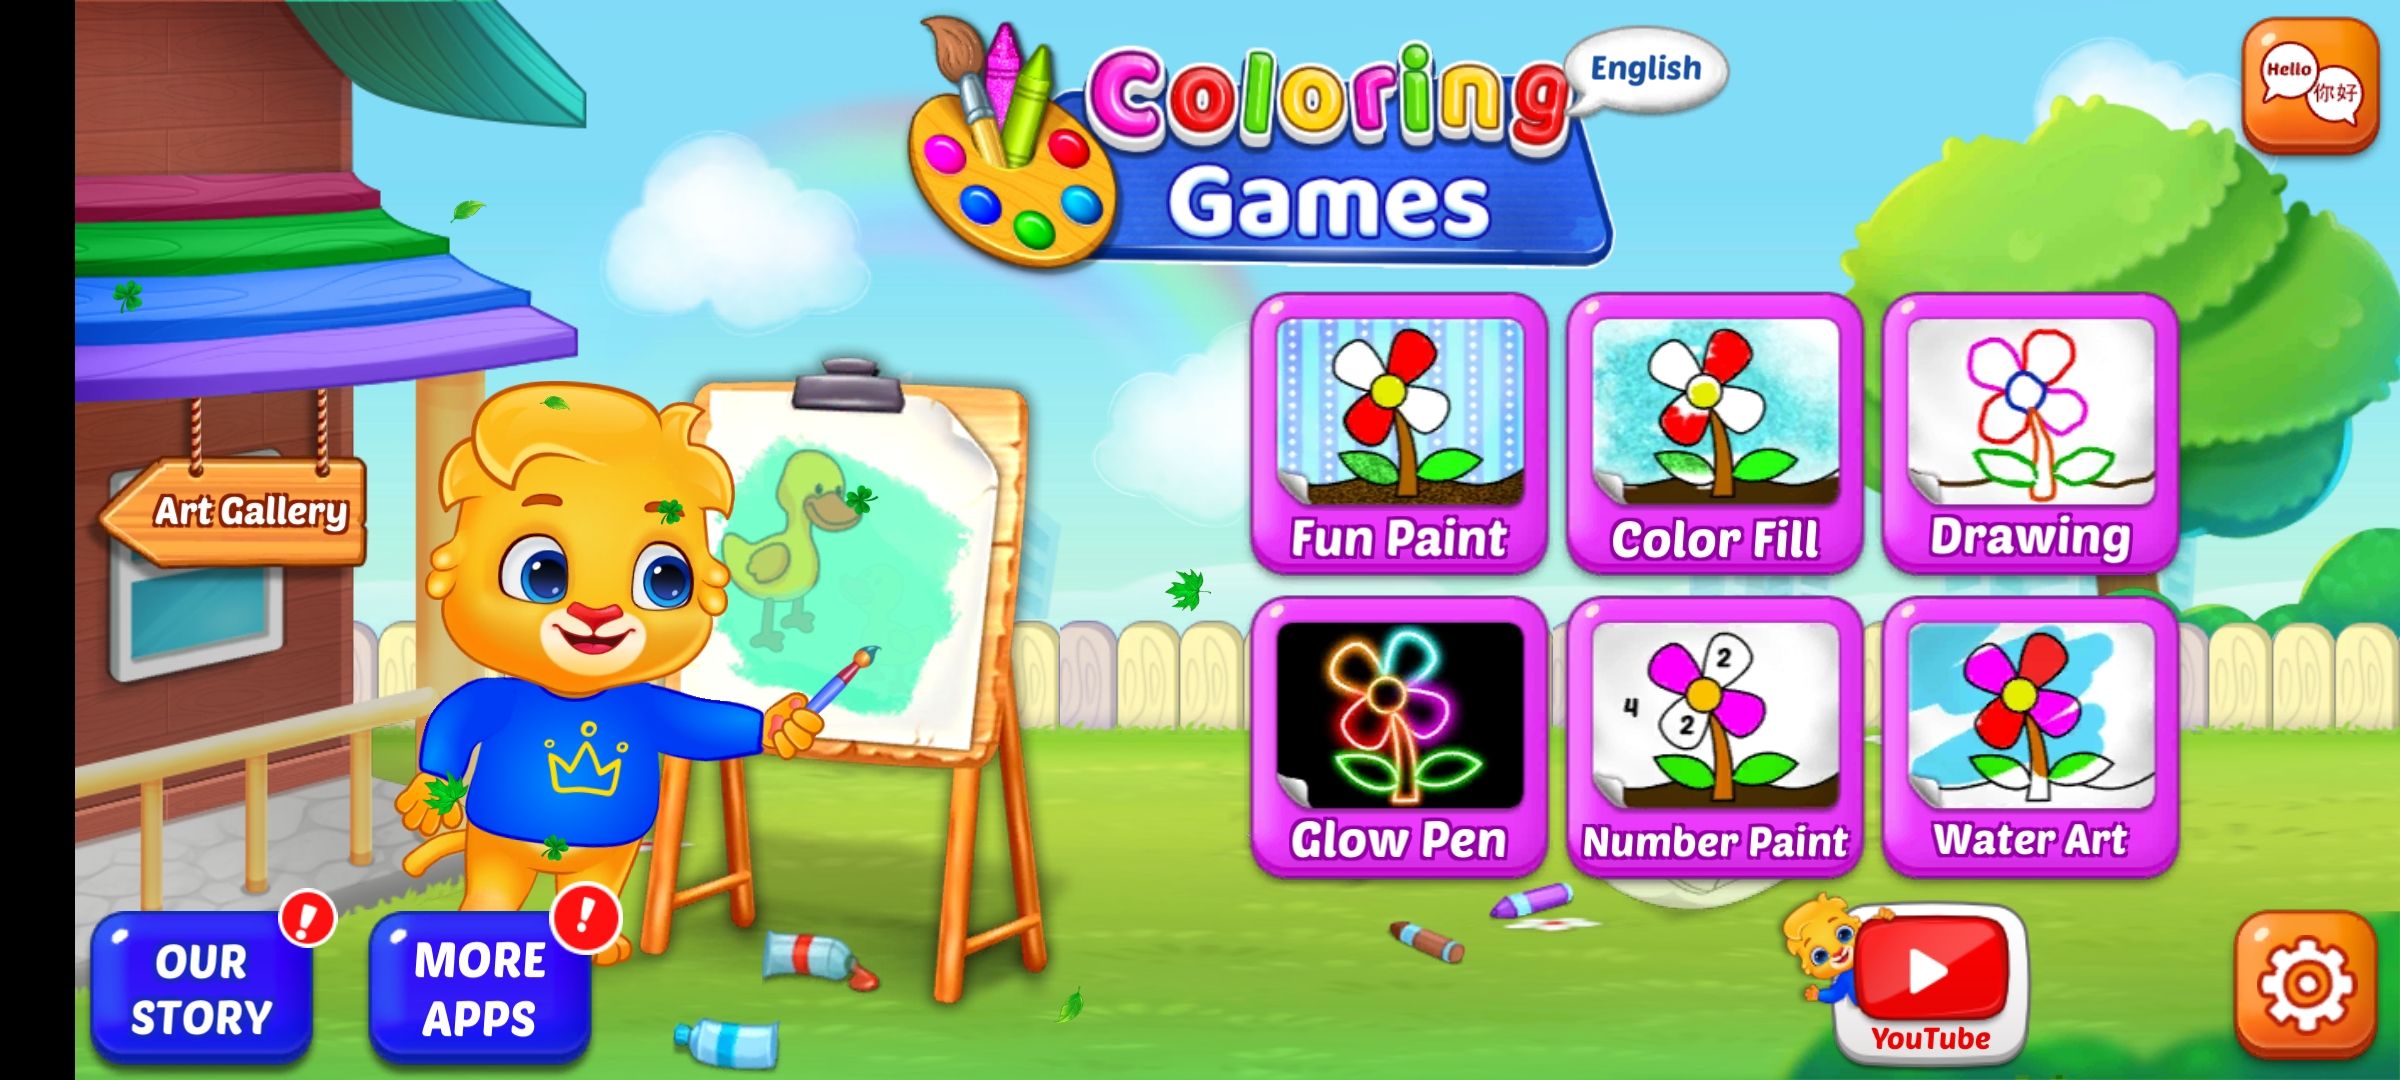 video game coloring app